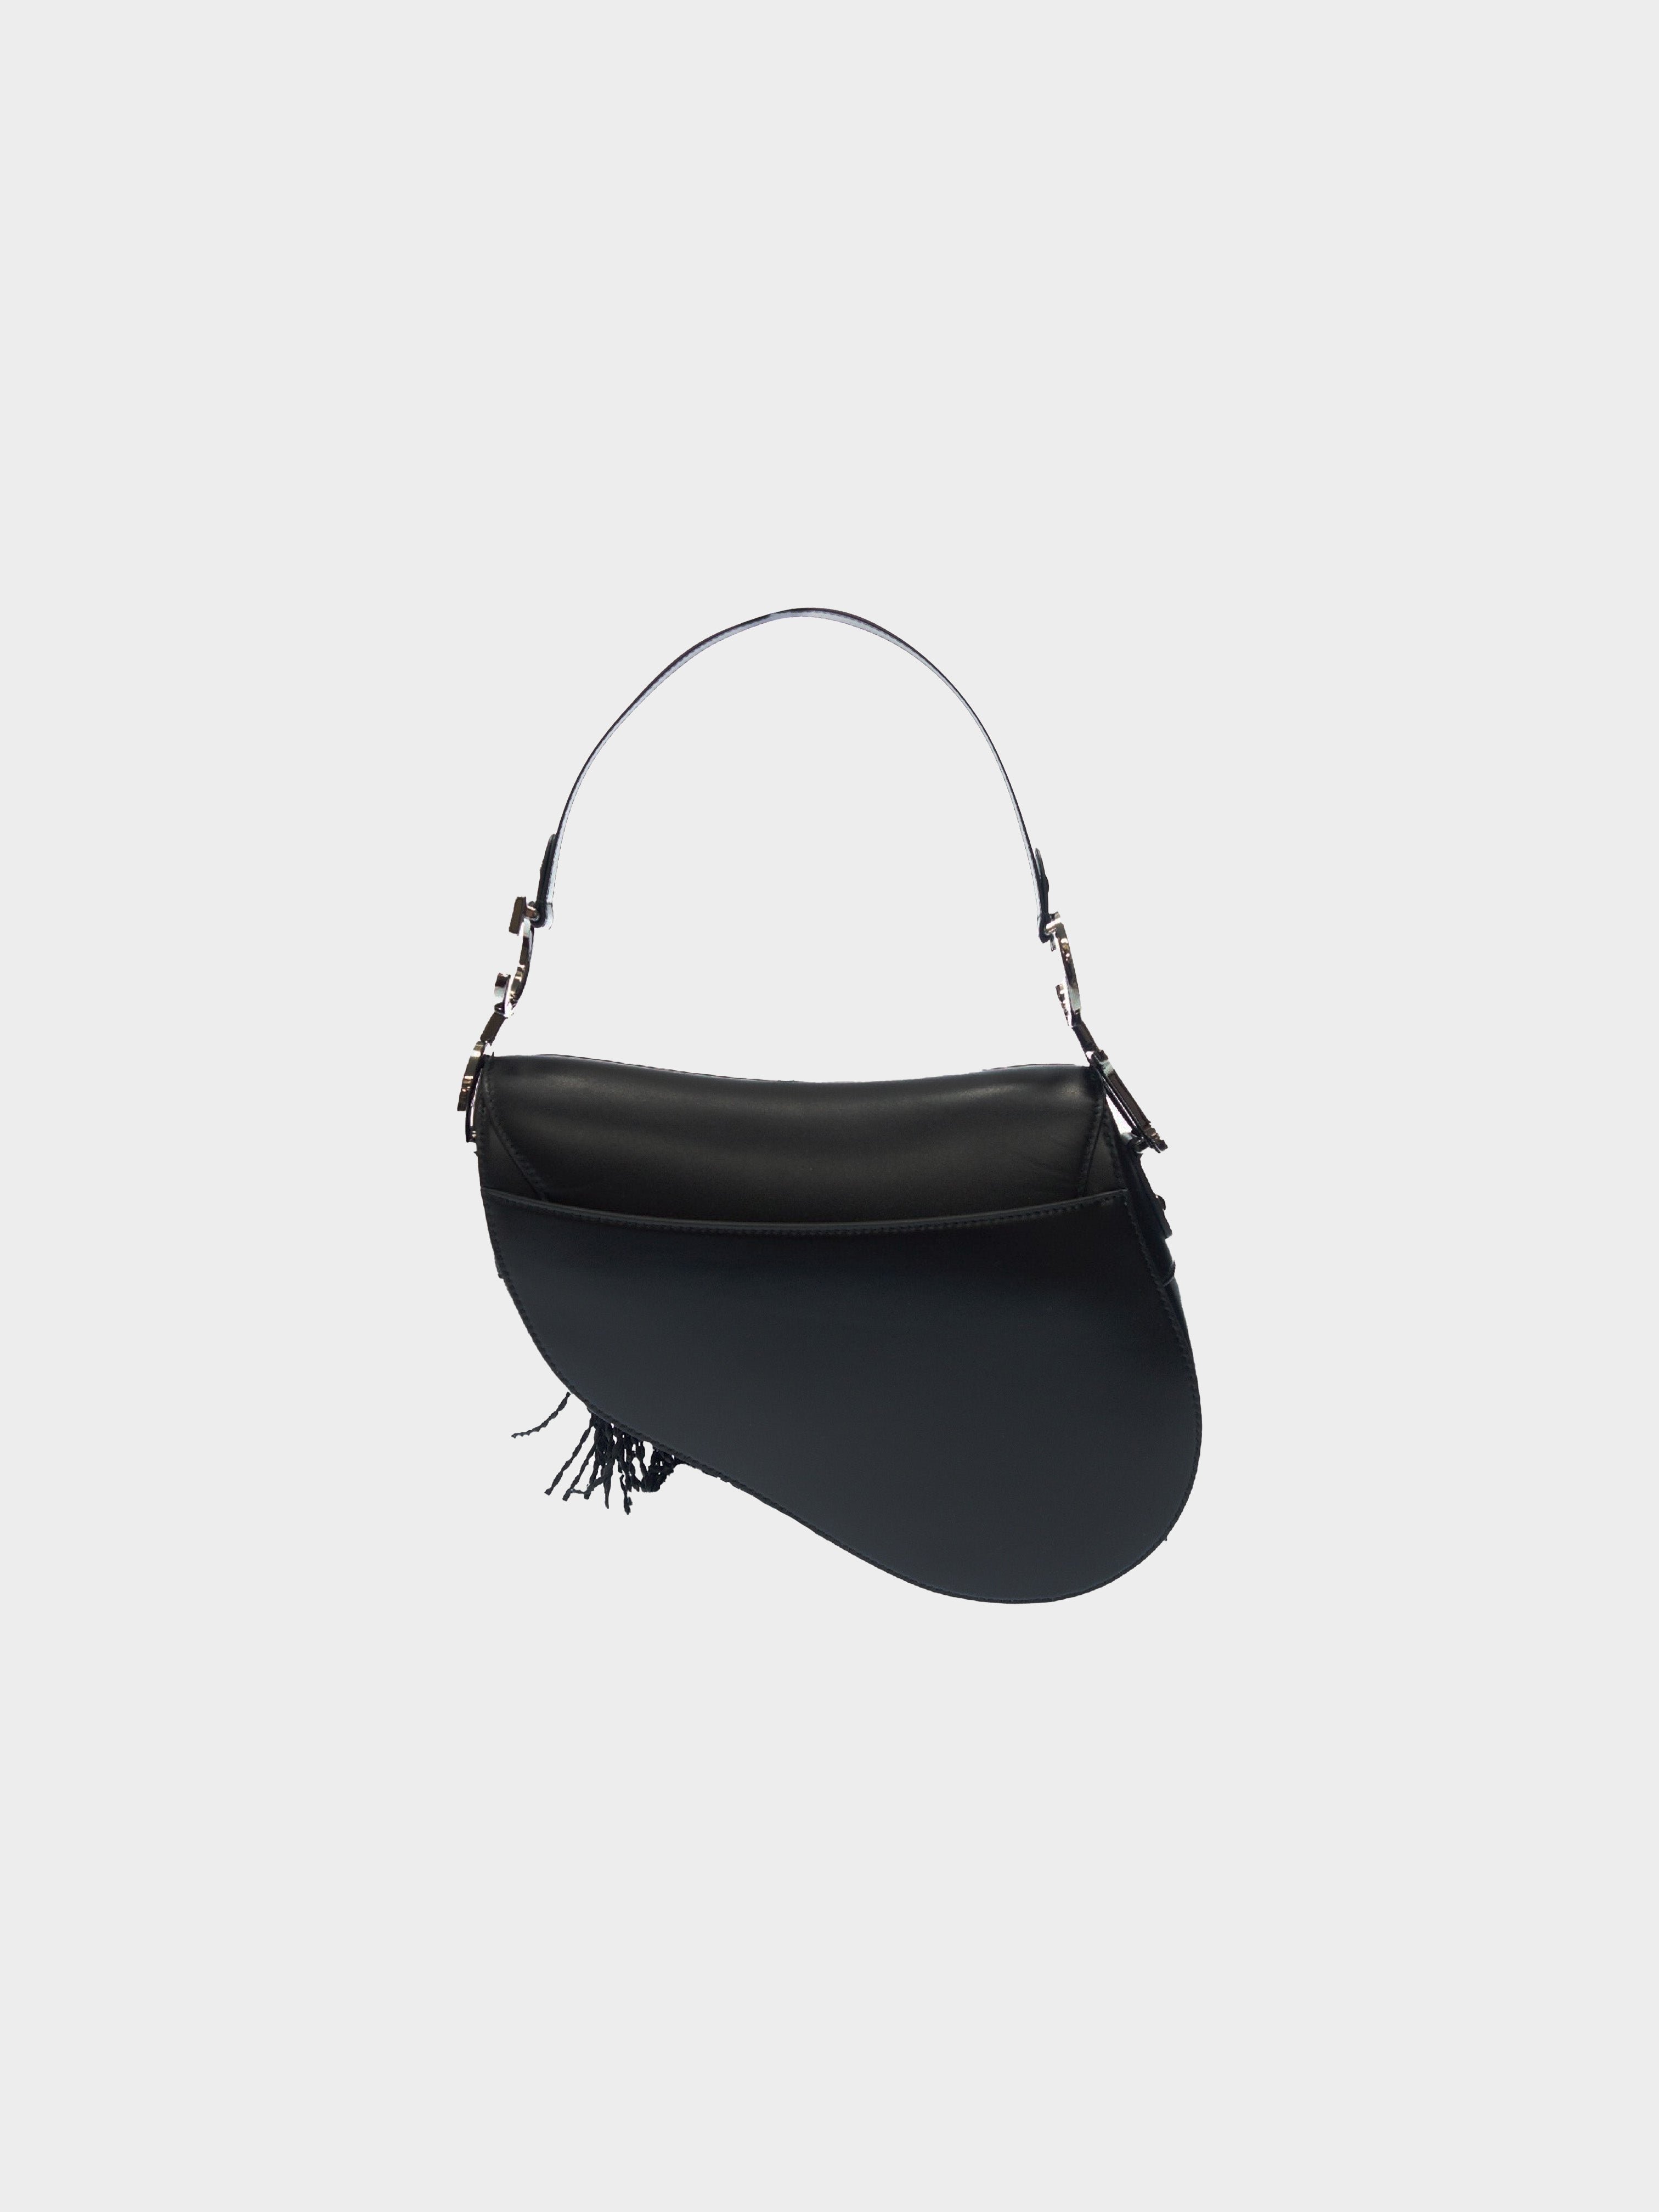 Christian Dior 2020s Limited Black Fringe Small Saddle Bag · INTO